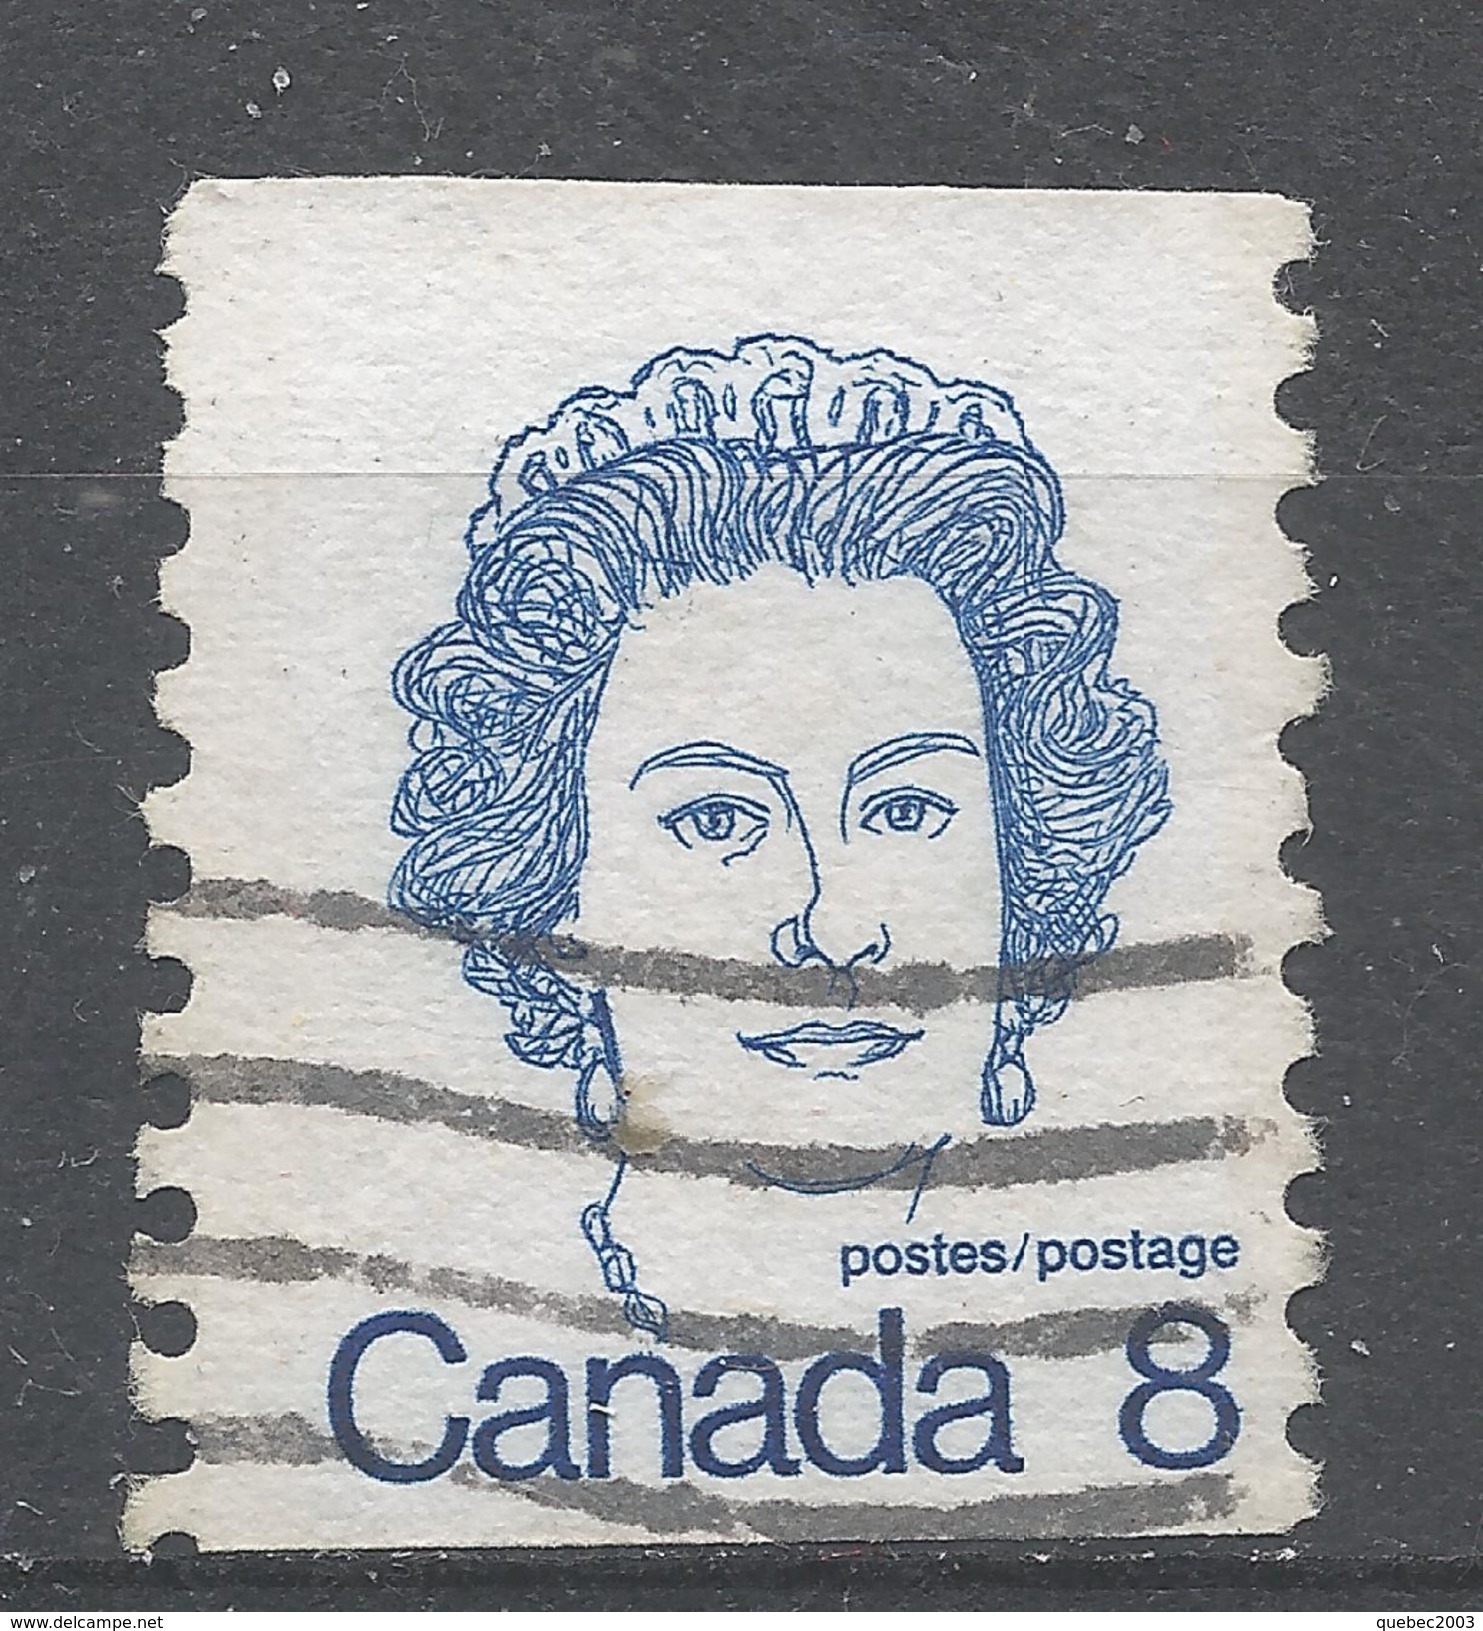 Canada 1974. Scott #604 (U) Queen Elizabeth II - Roulettes